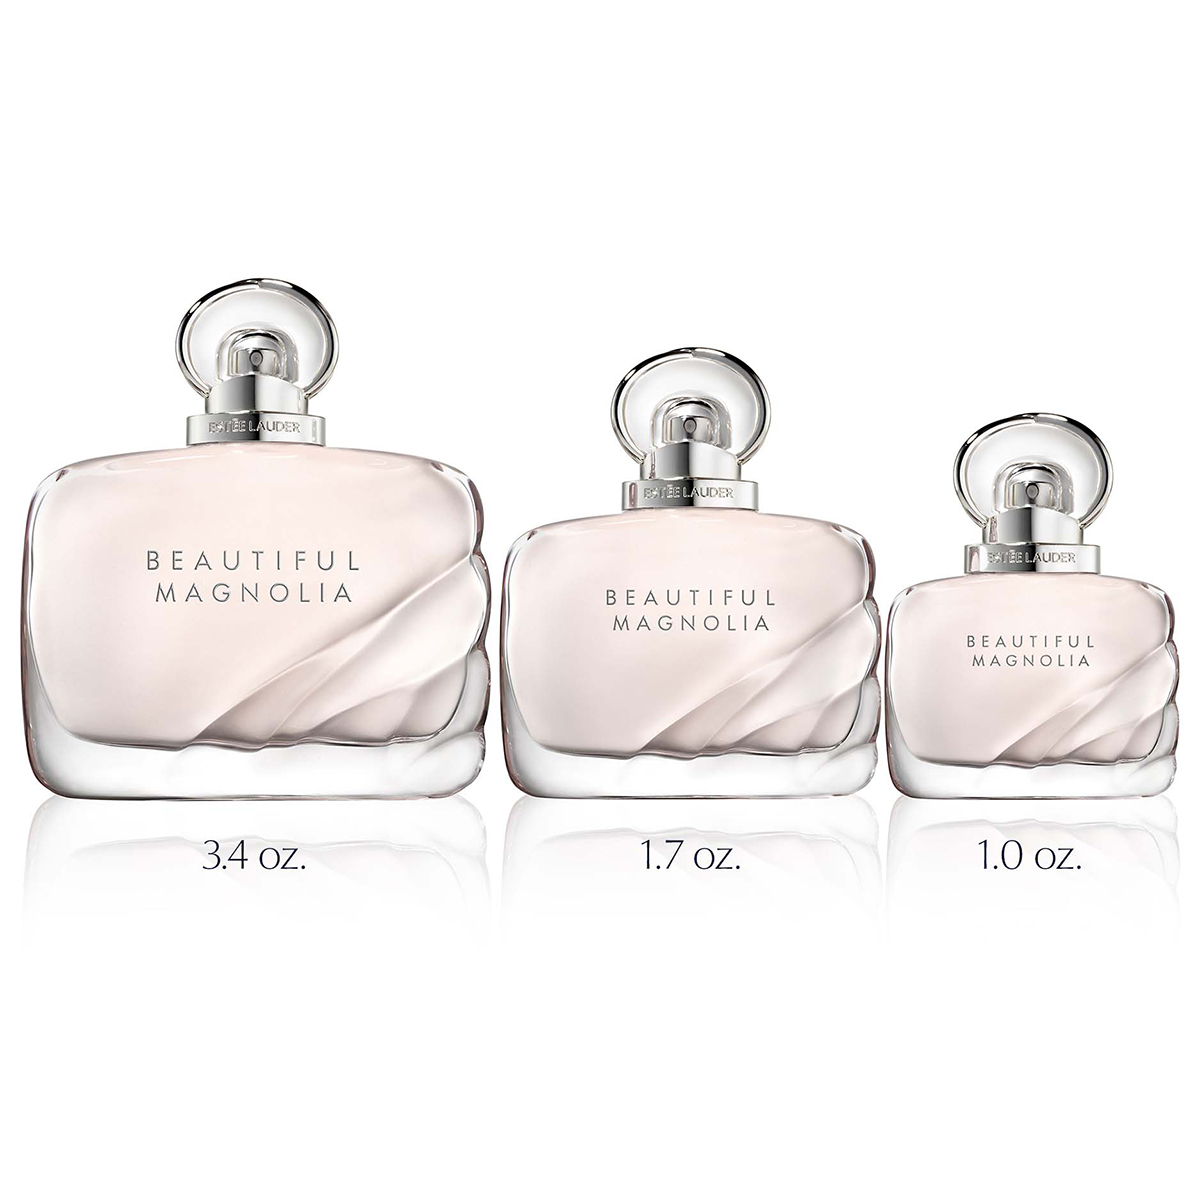 Estee Lauder(tm) Beautiful Magnolia Eau De Parfum